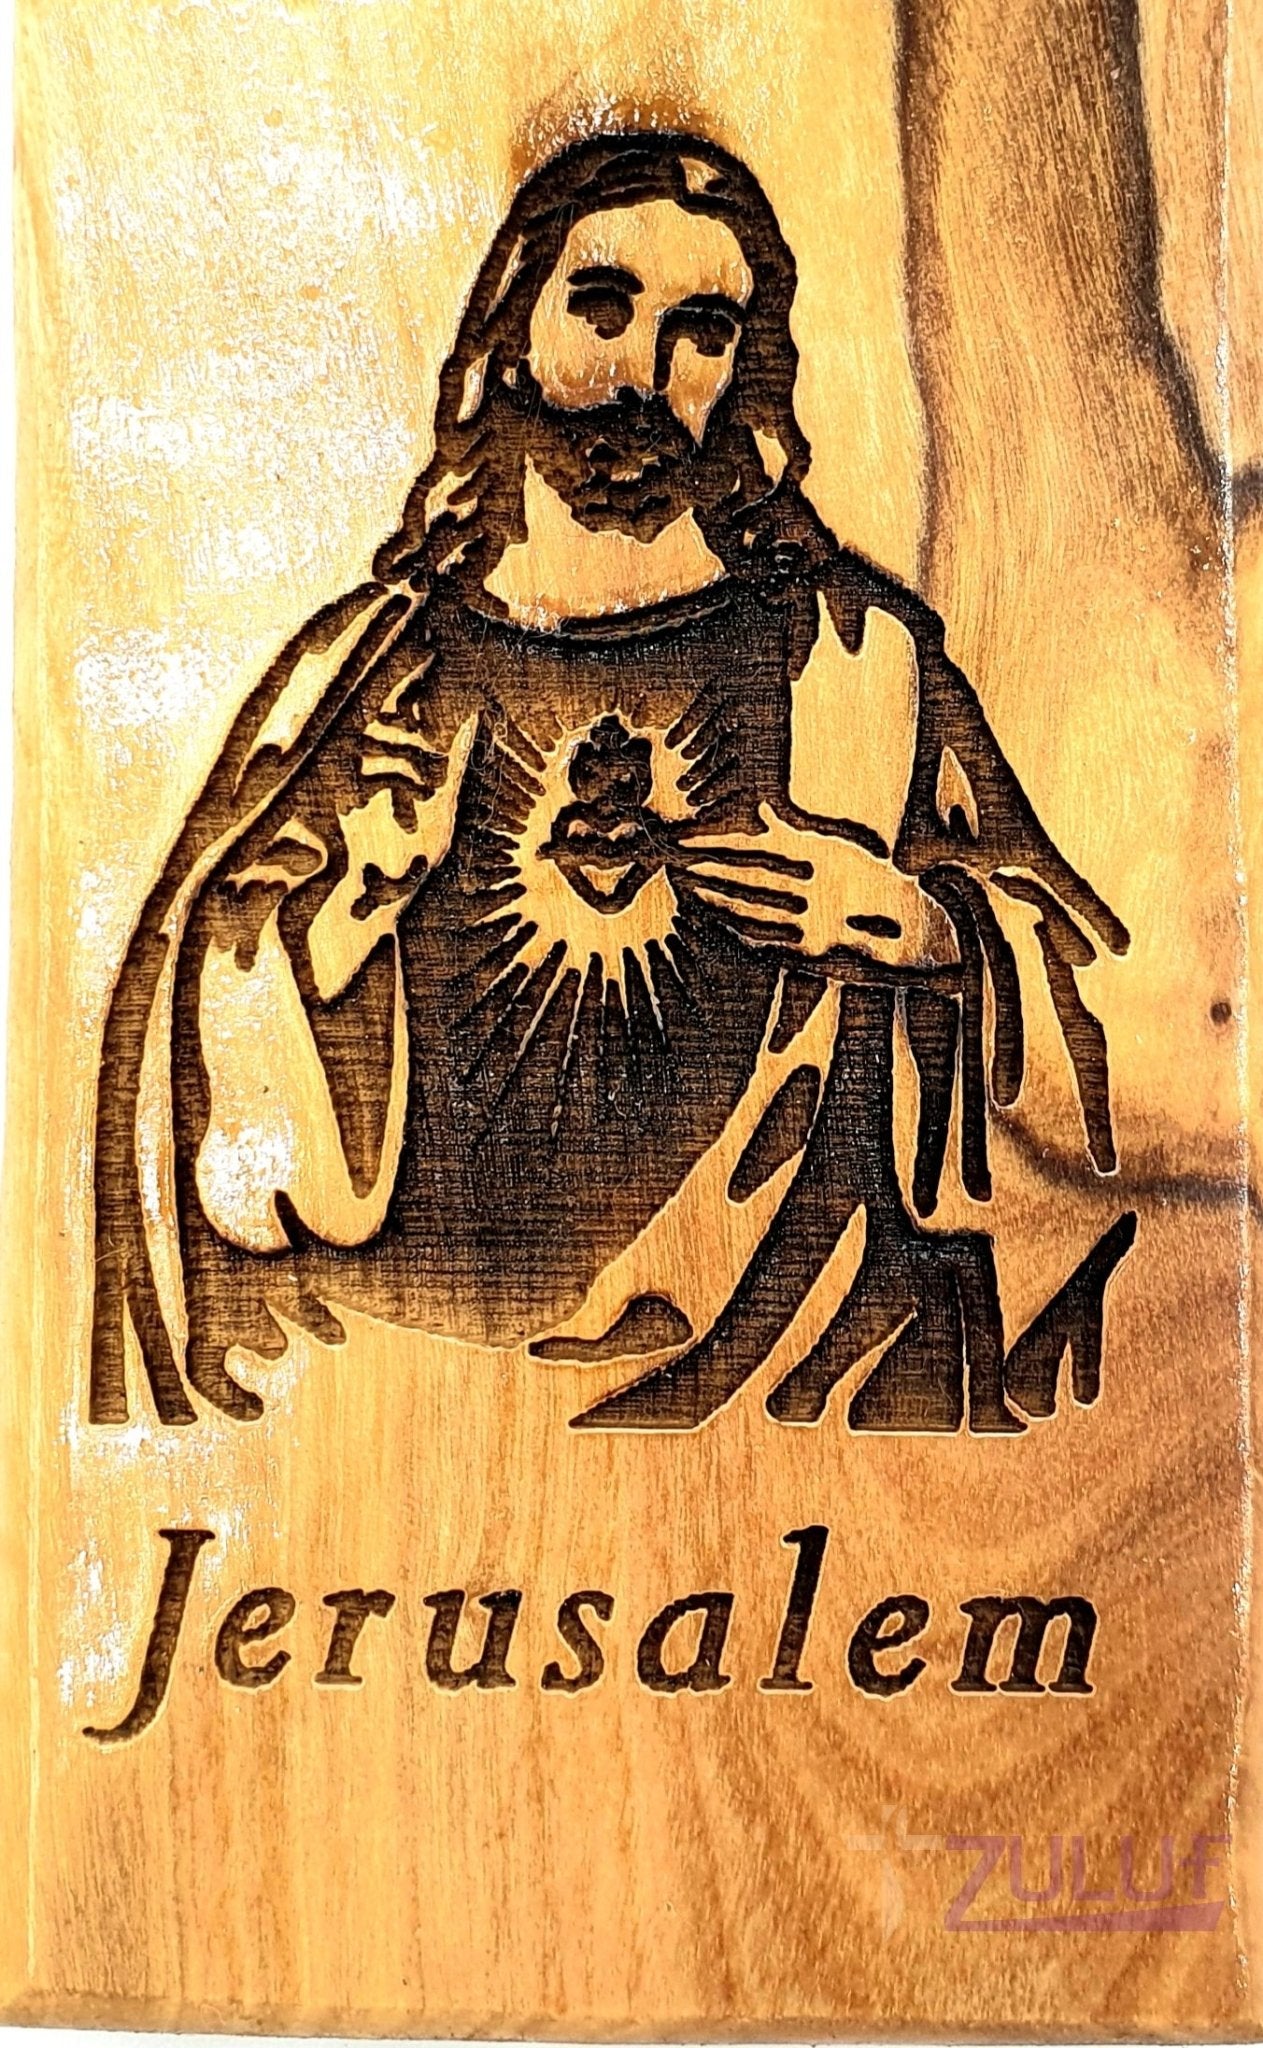 Jesus christ jerusalem hand made Magnet Religious Art Olive Wood Holy Land - MAG083 - Zuluf